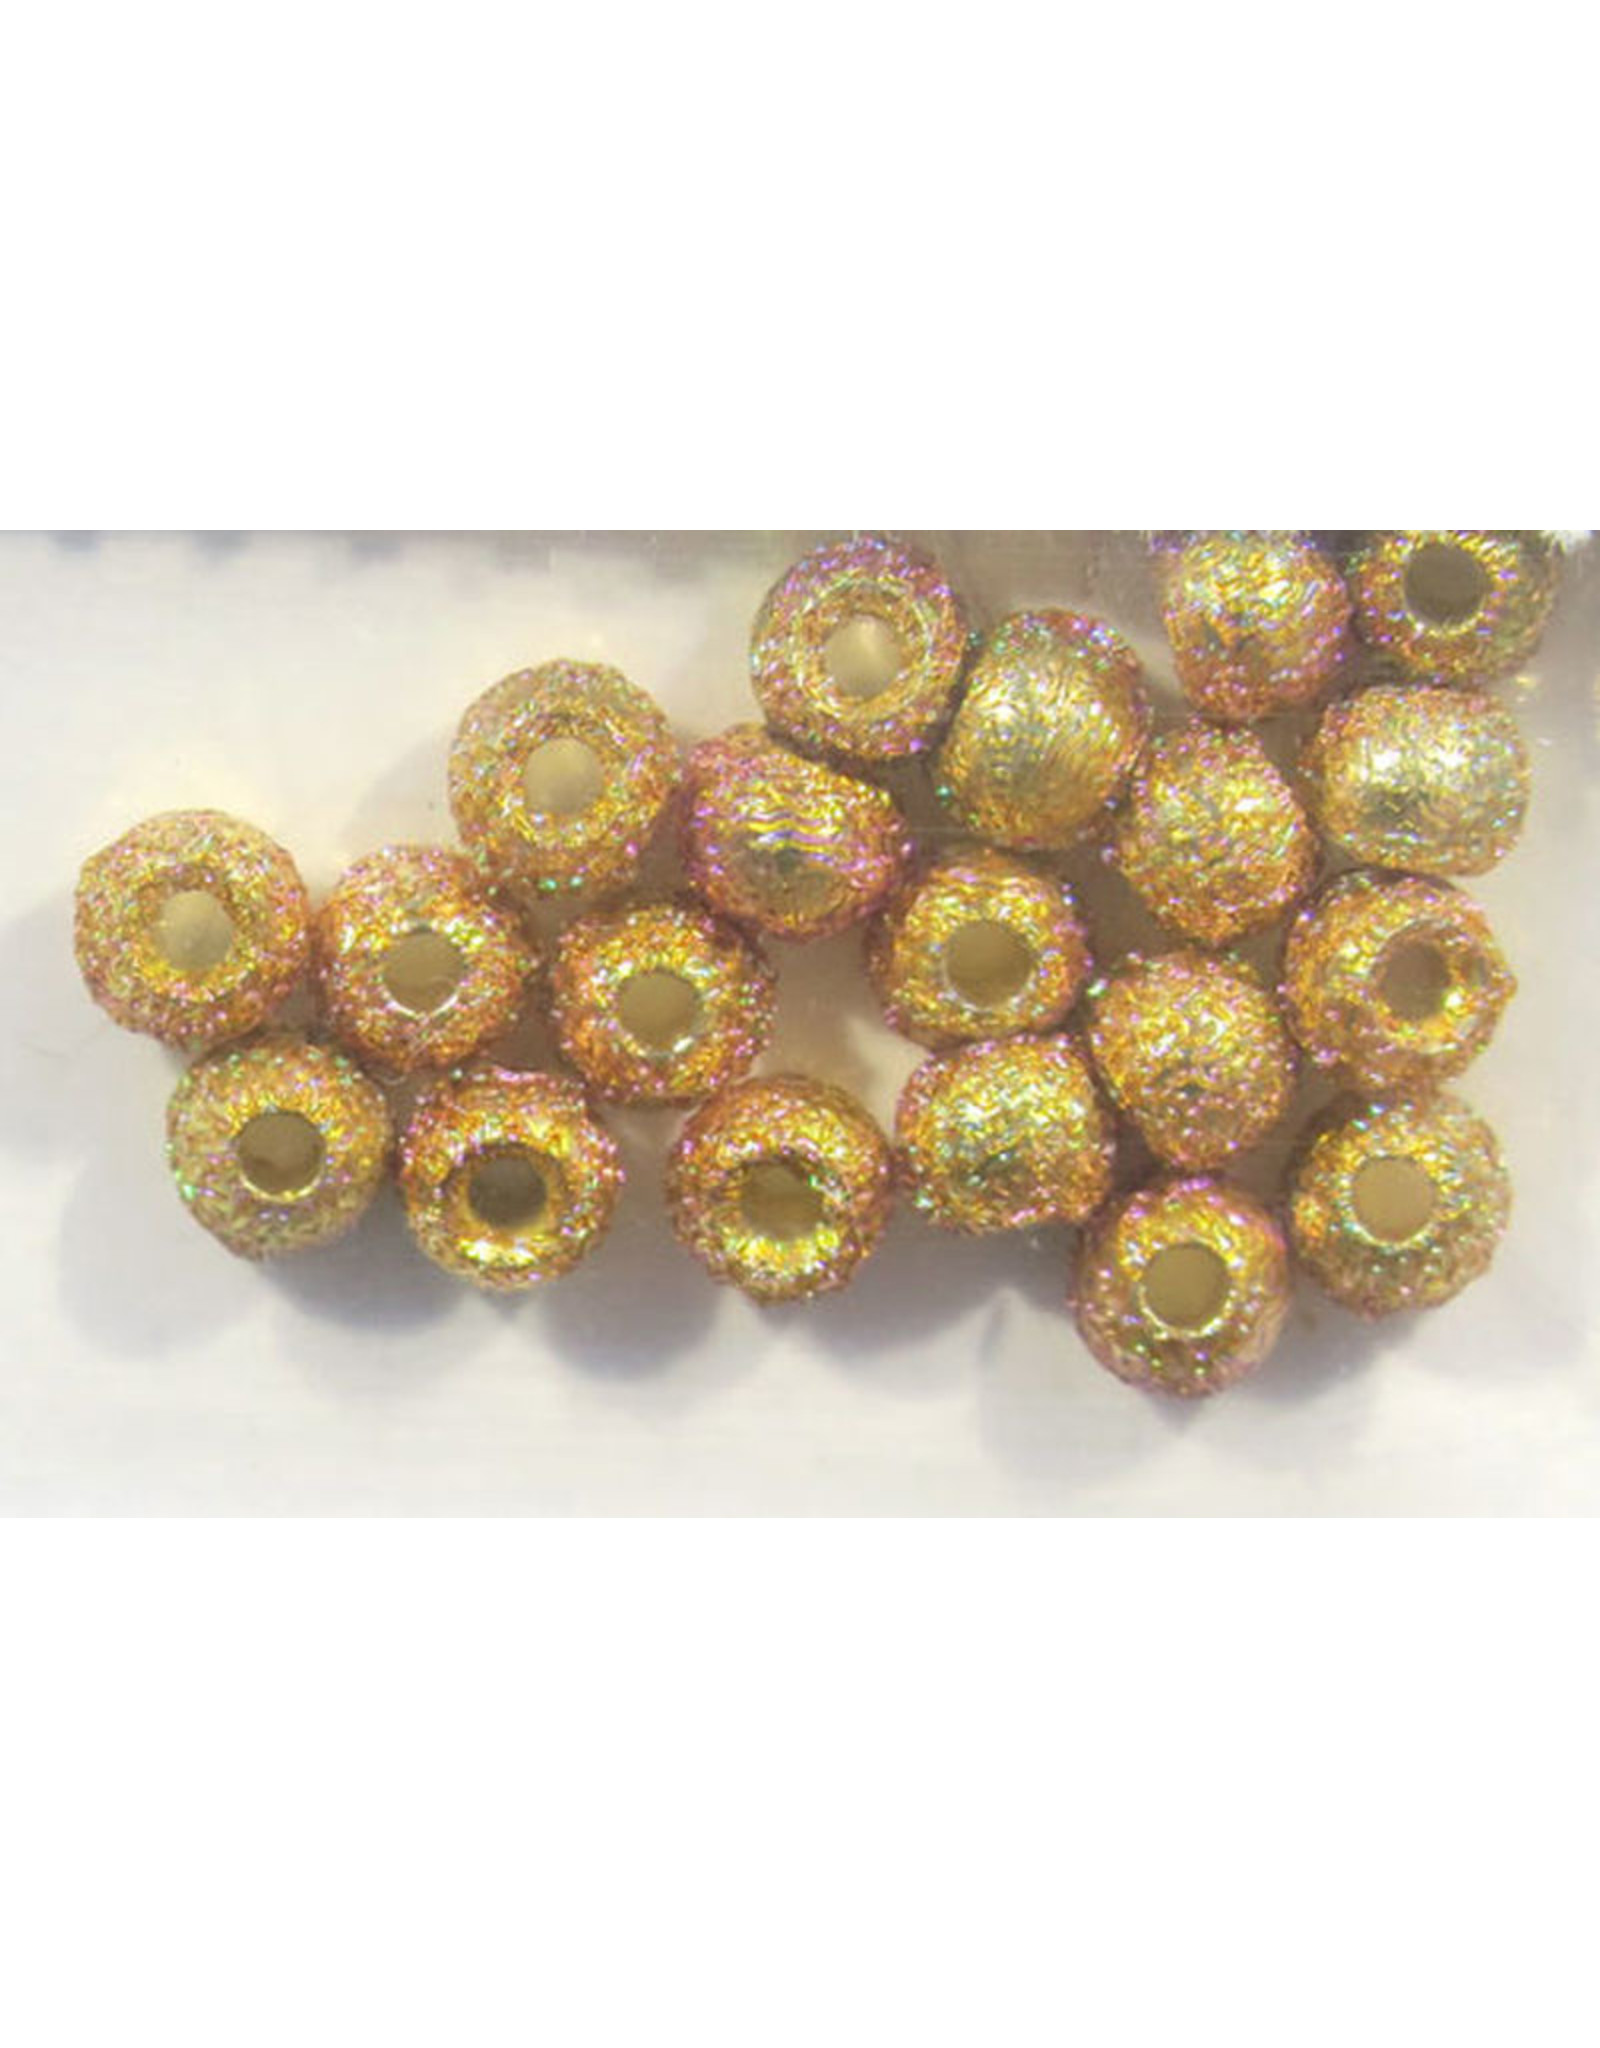 HARELINE Gritty Brass Beads